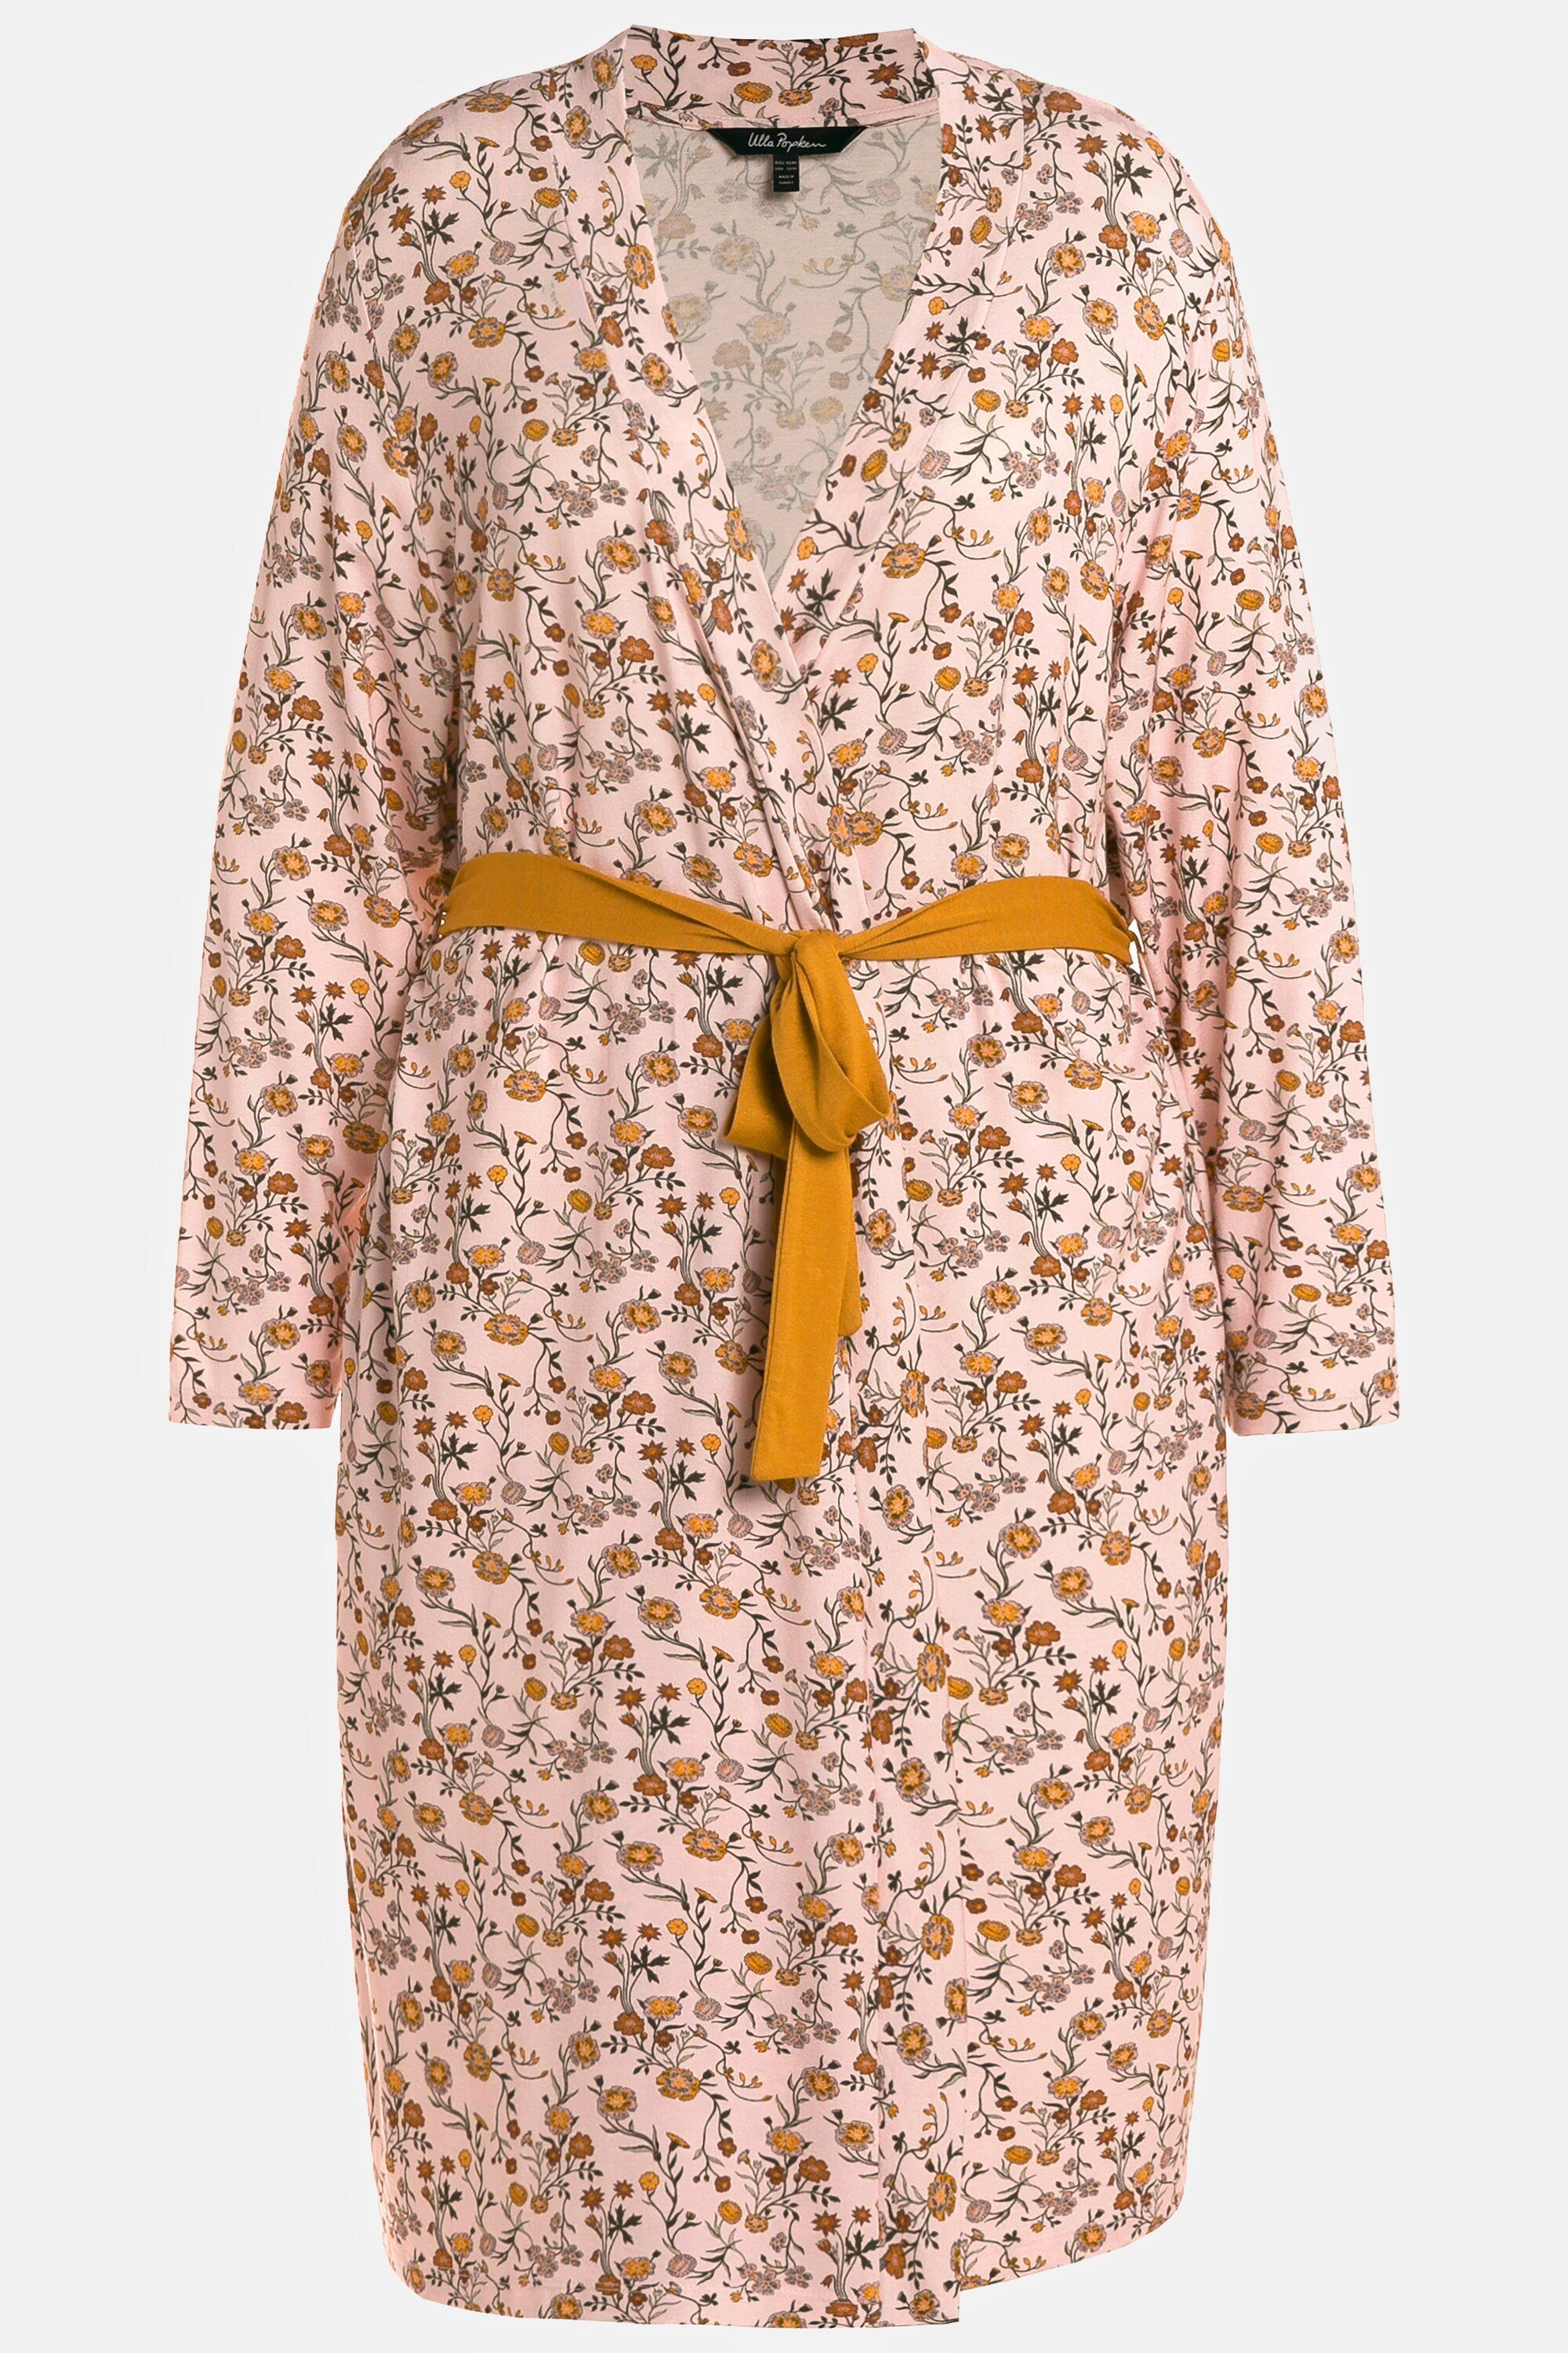 Ulla Popken Kimono Kimono Schalkragen ca. Materialmix offene Langarm, Oberschenkel, Mitte Blüten Form